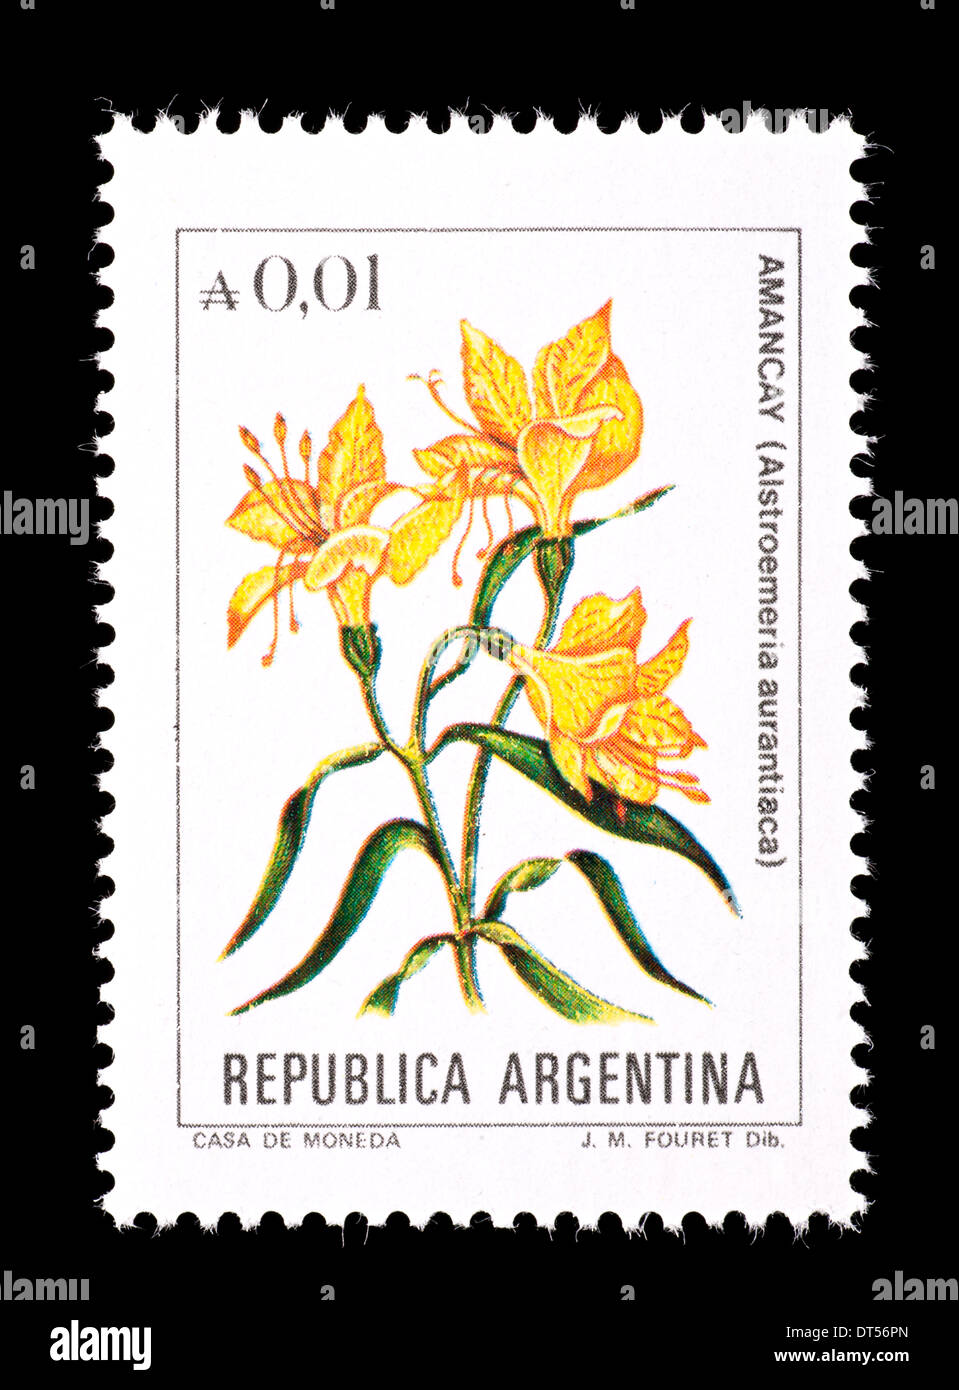 Postage stamp from Argentina depicting Peruvian lilies (Alstroemerias aurantiaca). Stock Photo